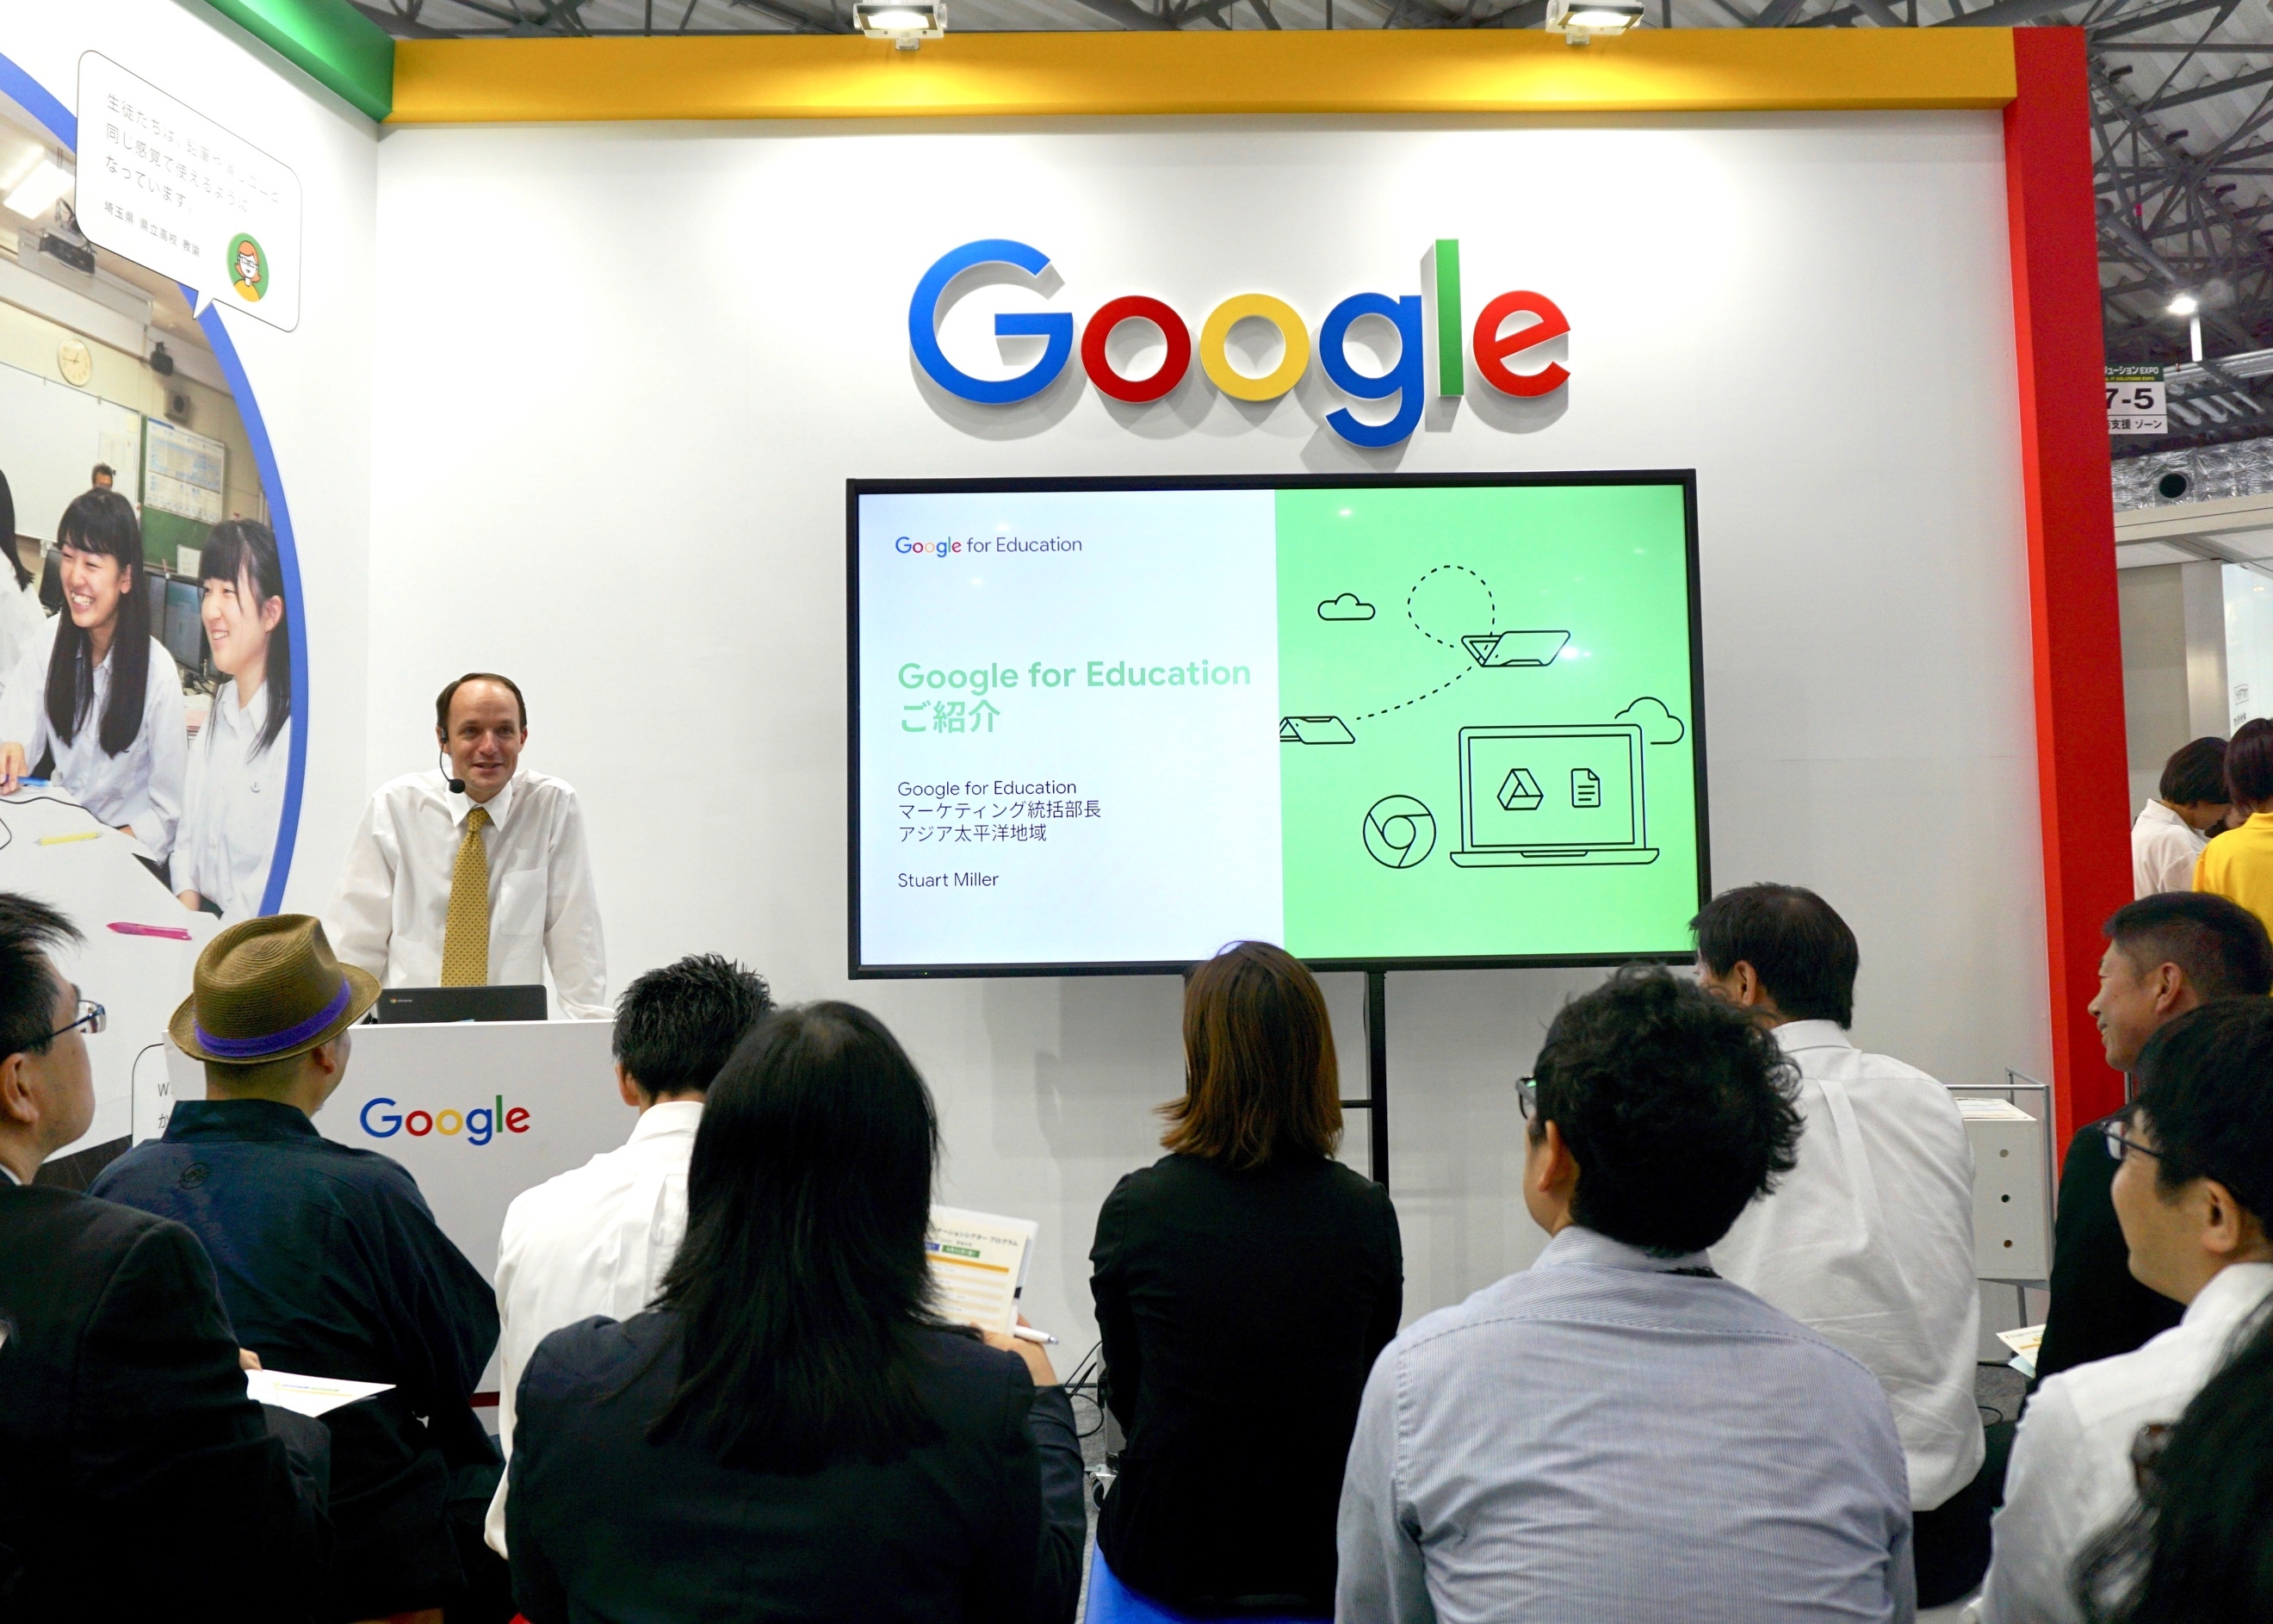 Google for Educationマーケティング統括部長 アジア太平洋地域Stuart Miller氏が自ら登壇し、「Google for Education」の内容を紹介した。
